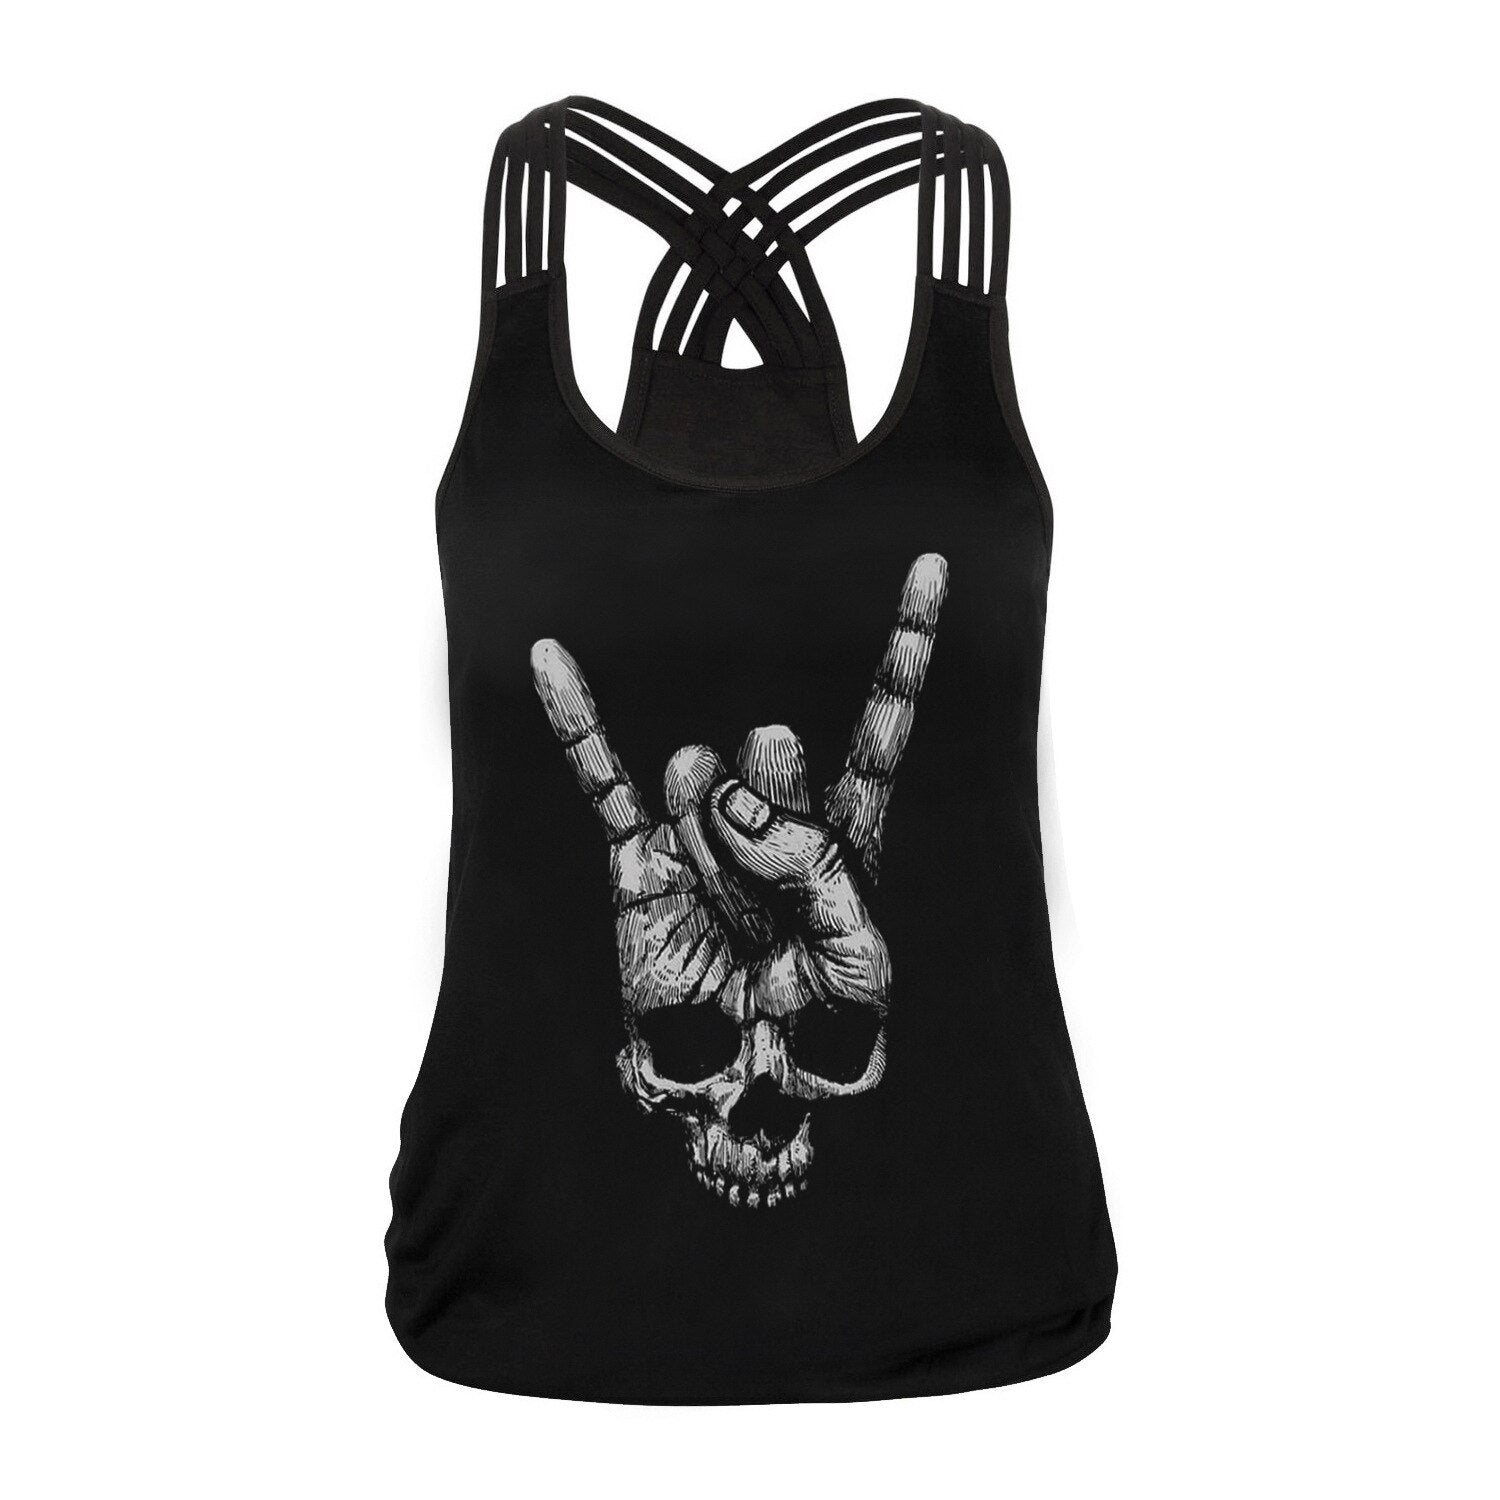 Sugar Skull Tank Top for Women / Halloween Fashion / Gothic Style Back Cross Sleeveless Vest #8 - HARD'N'HEAVY